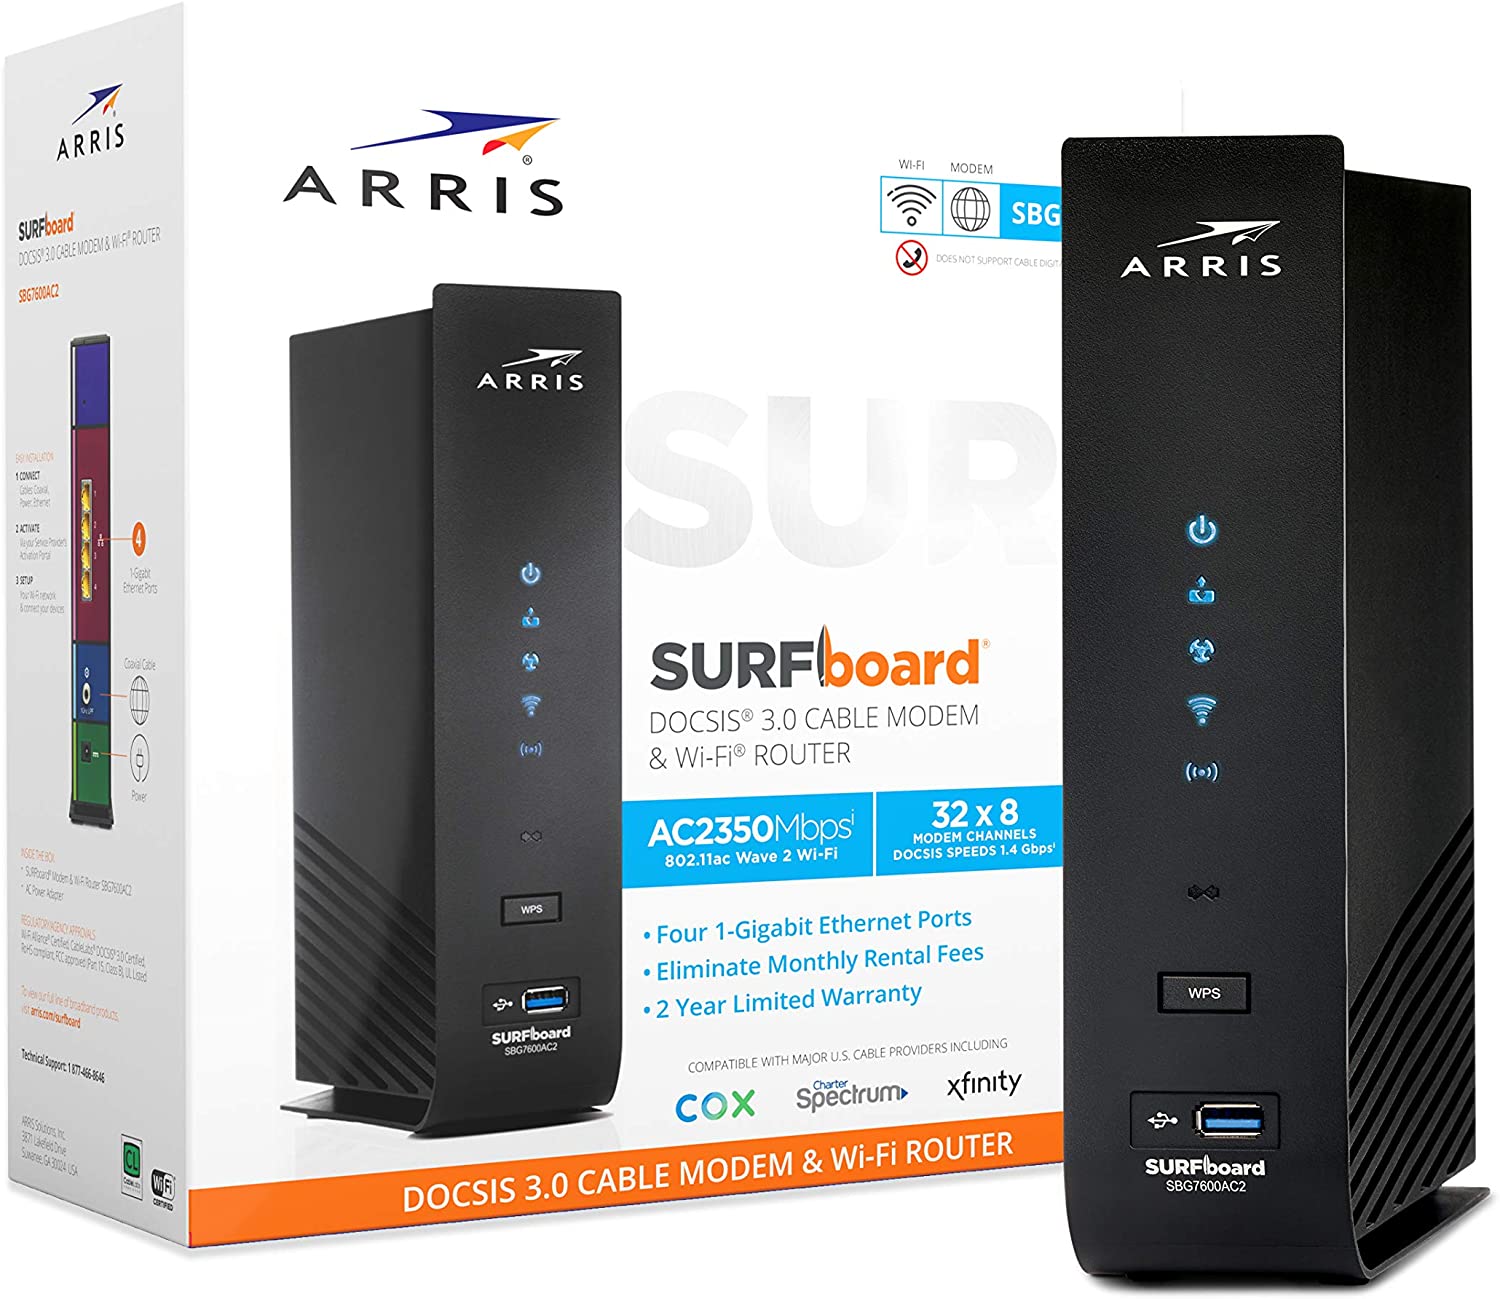 ARRIS SURFboard SBG7600